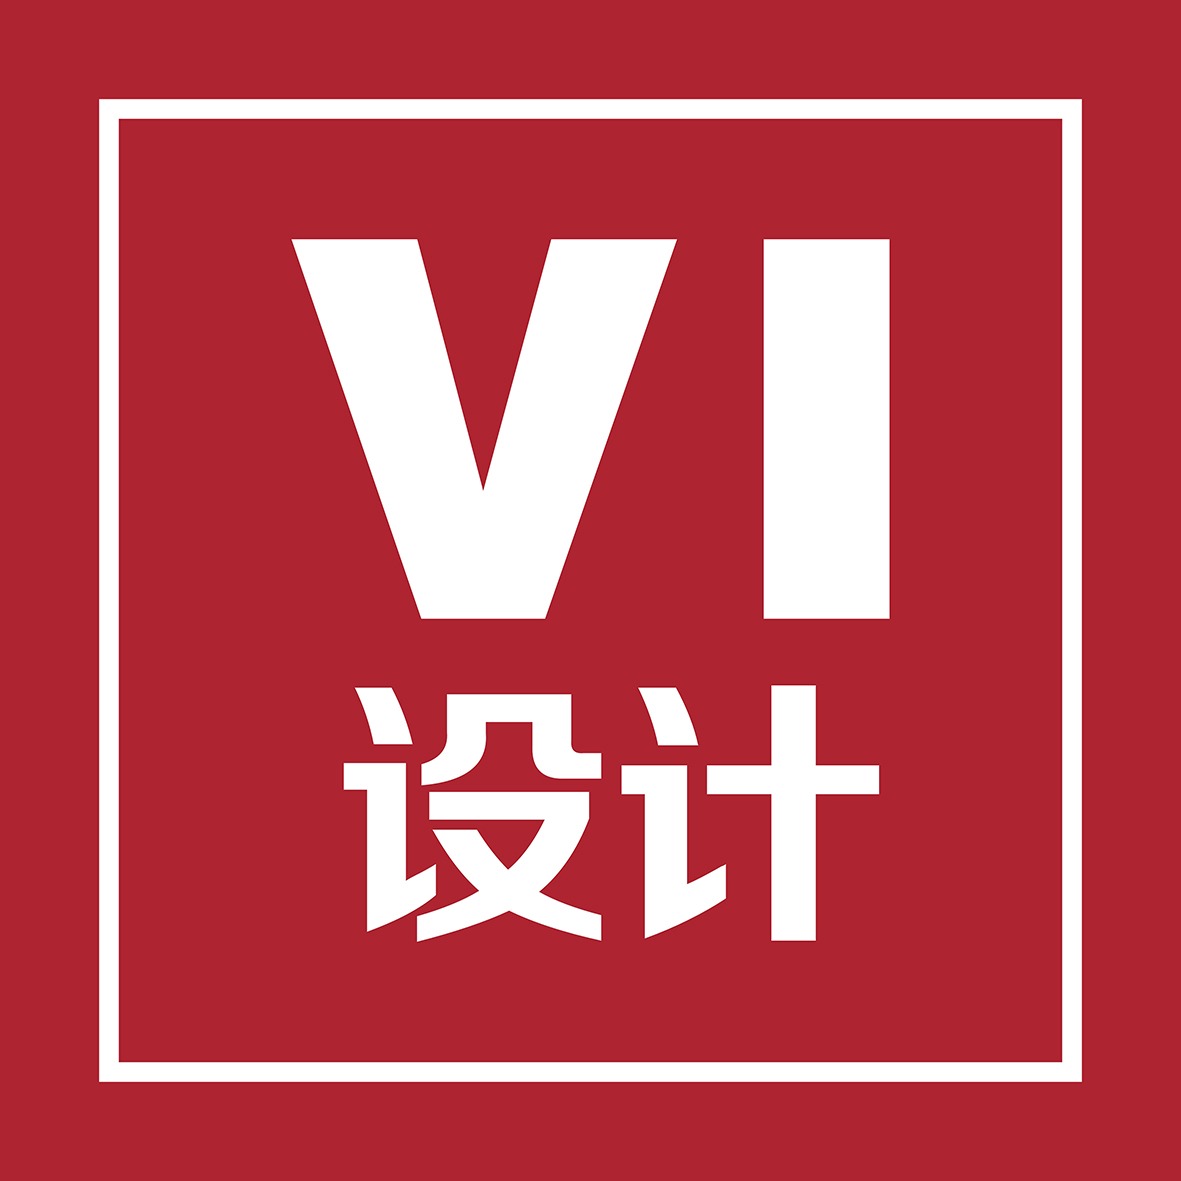 VI设计VI导视VI全套卡通形象企业VI设计公司VI设计